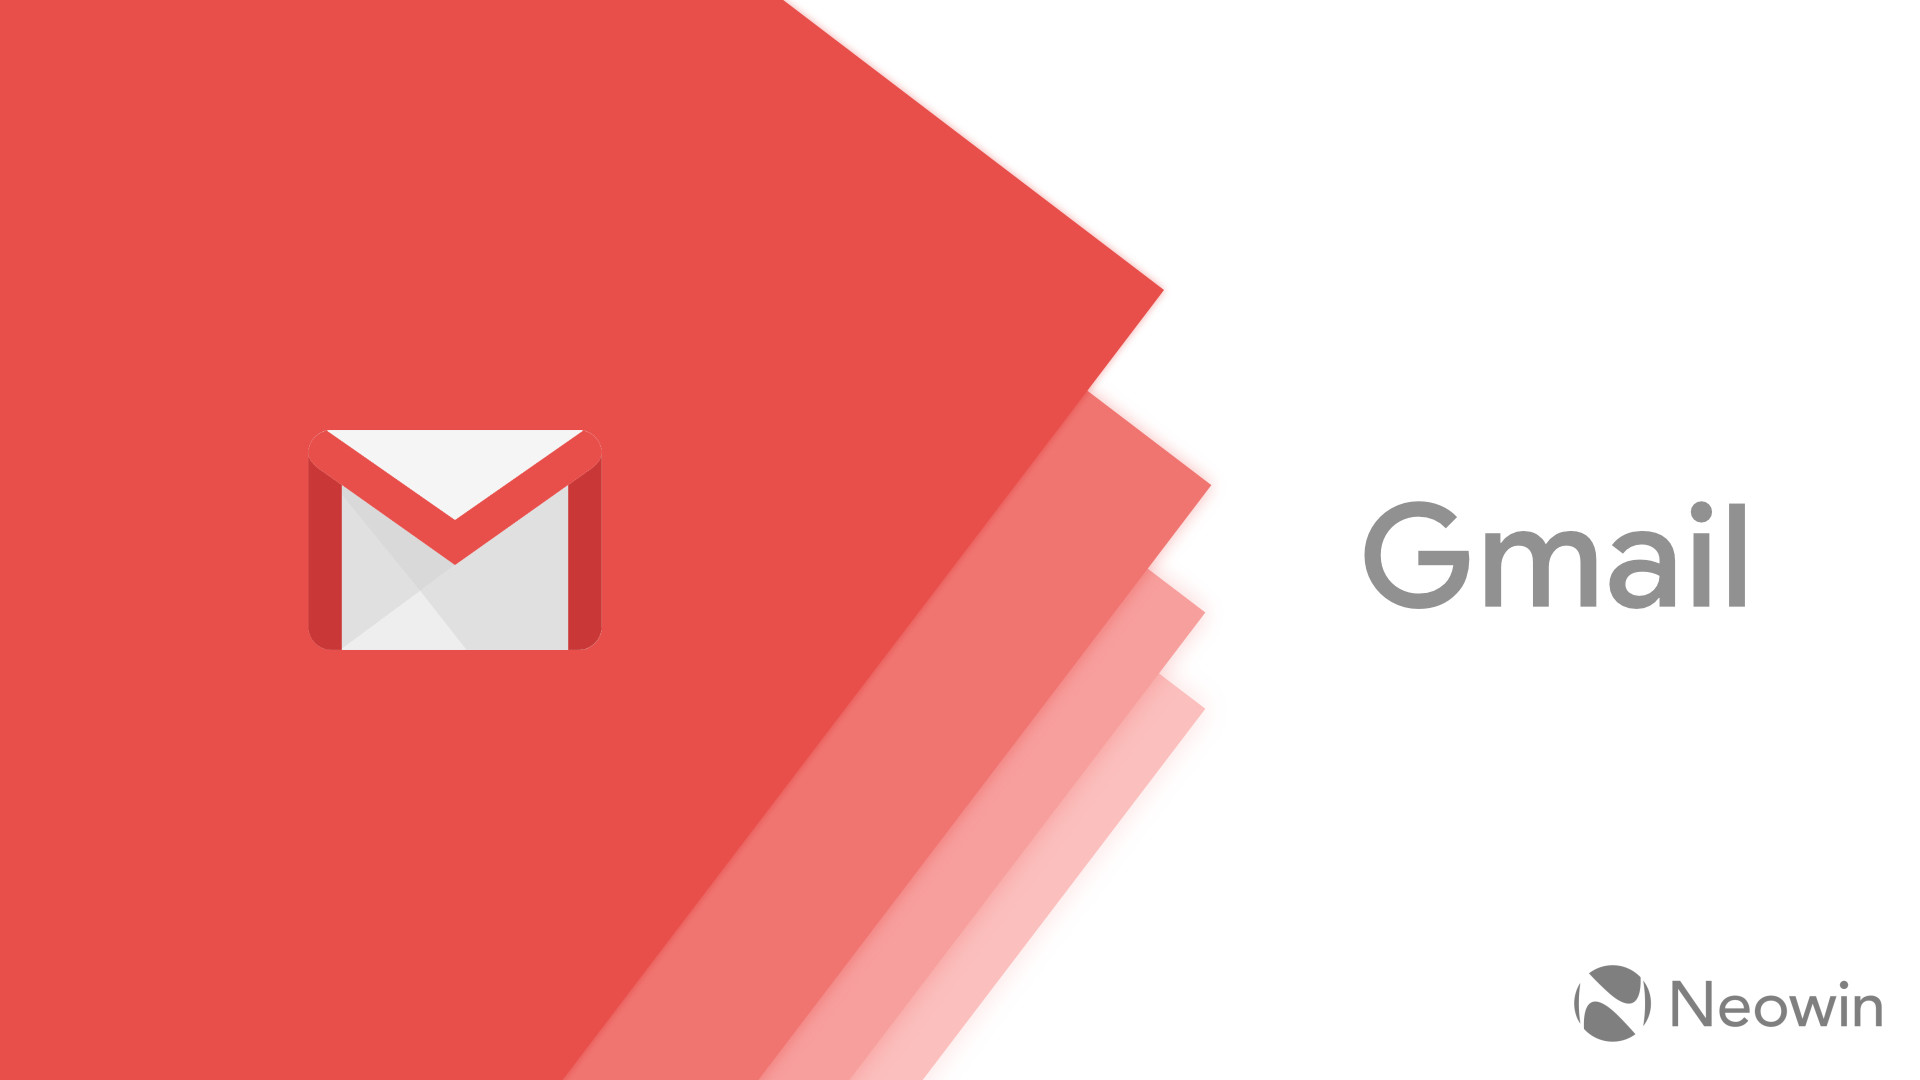 P gmail com. Wagtail. Gmail логотип. Background gmail.